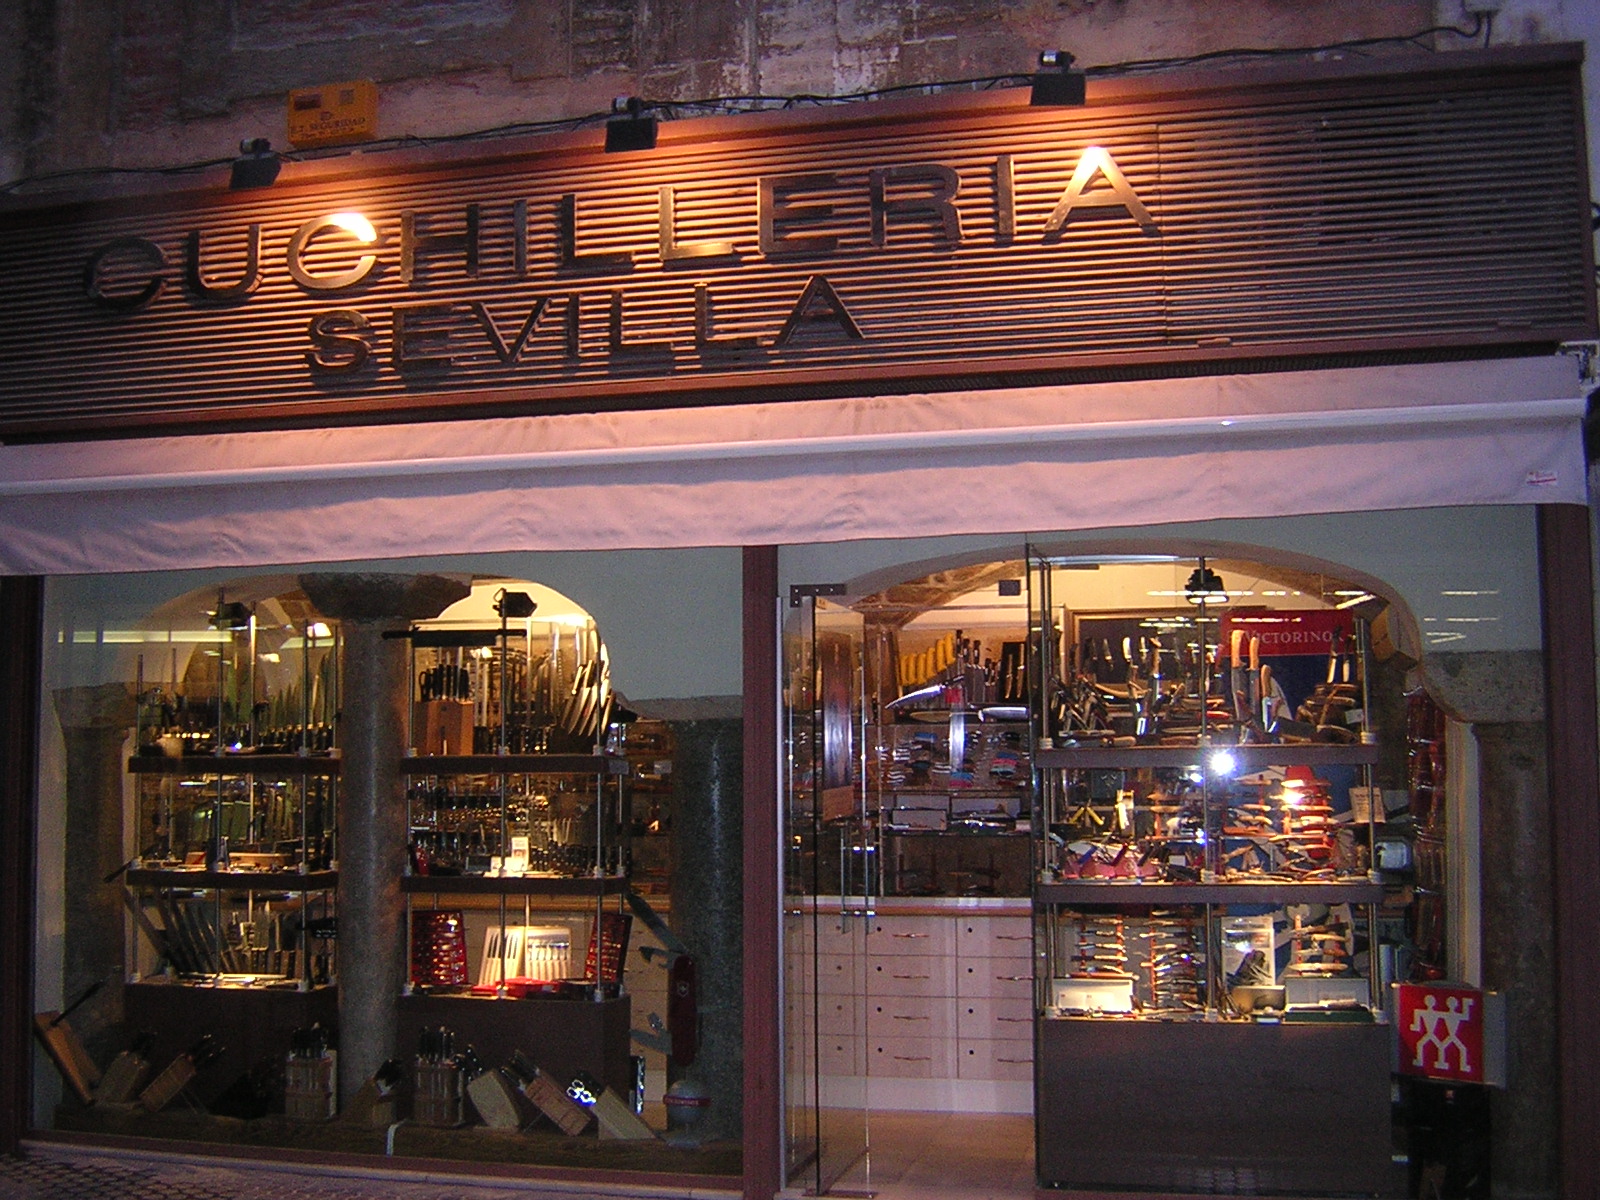 Images Cuchillería Sevilla